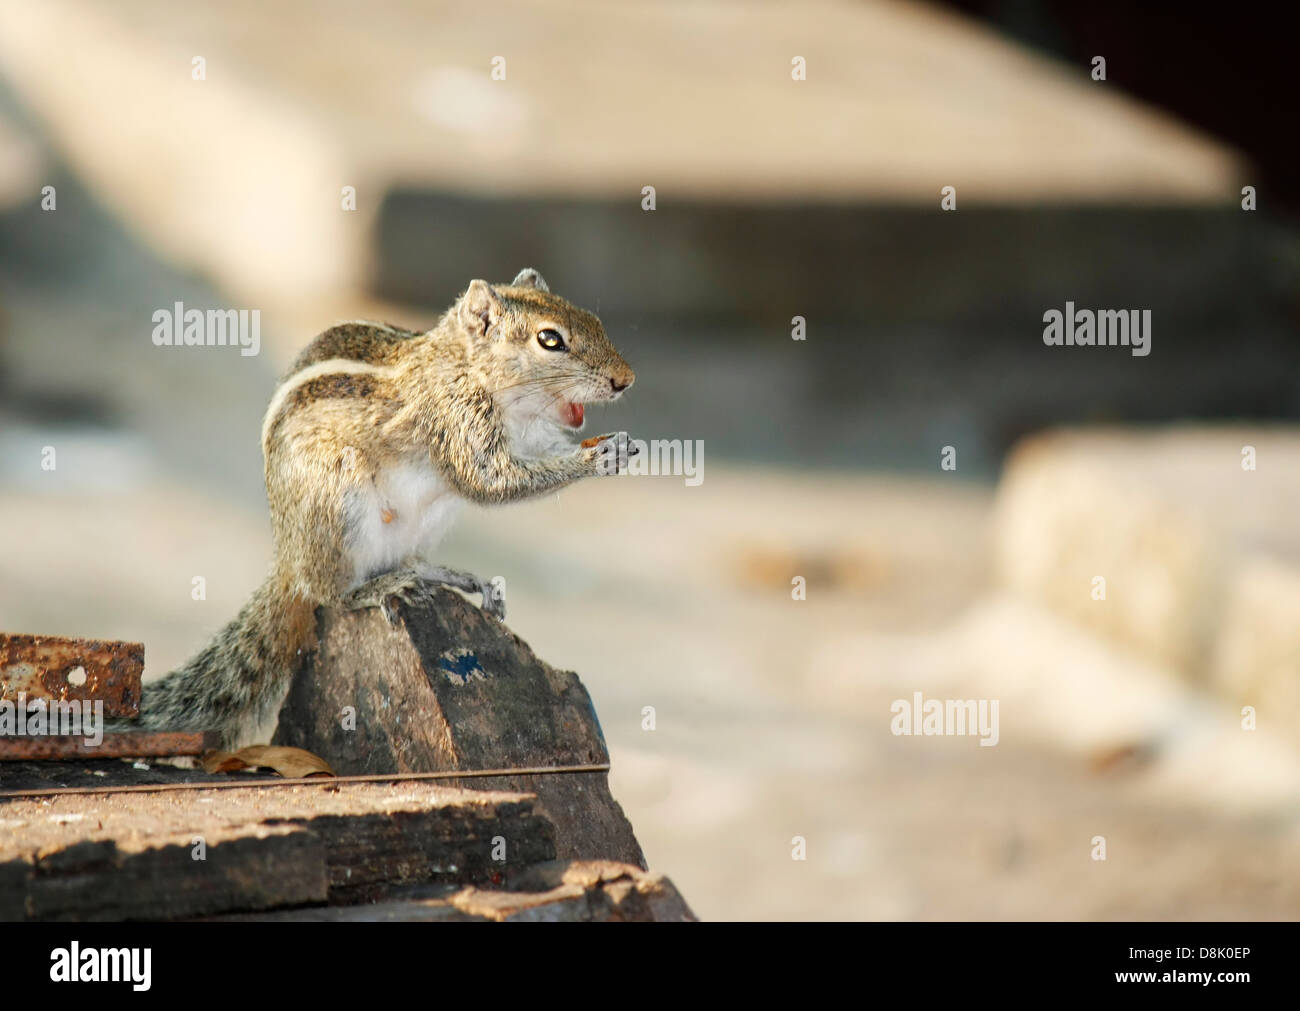 A Grey squirrel tasting a nut Stock Photo